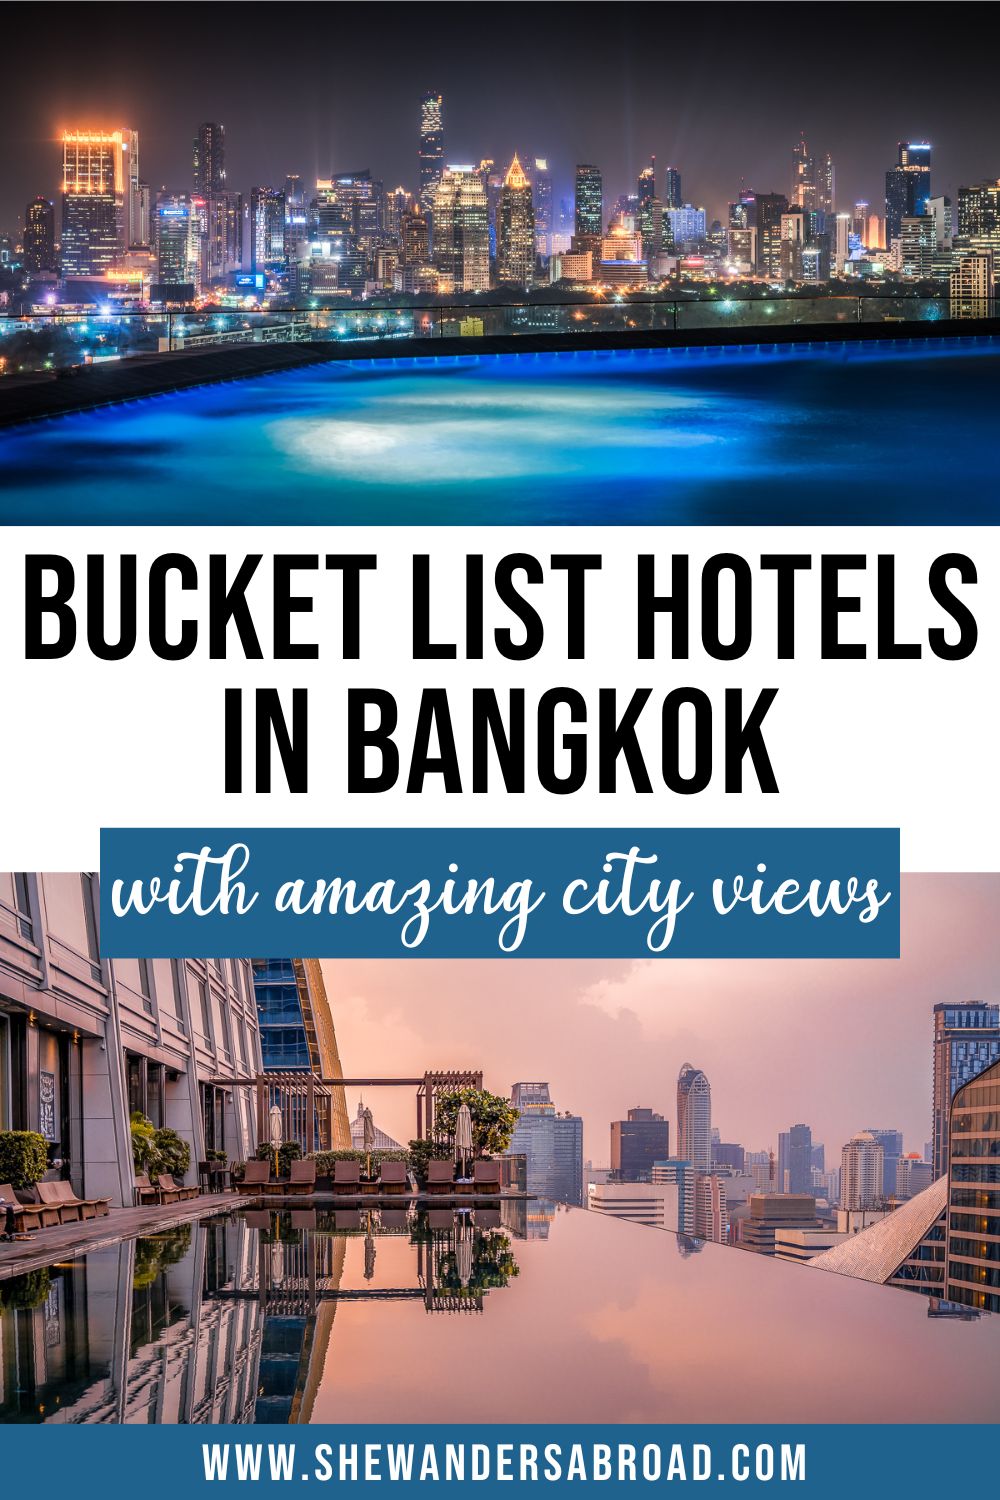 Bangkok Hotels with Best Views